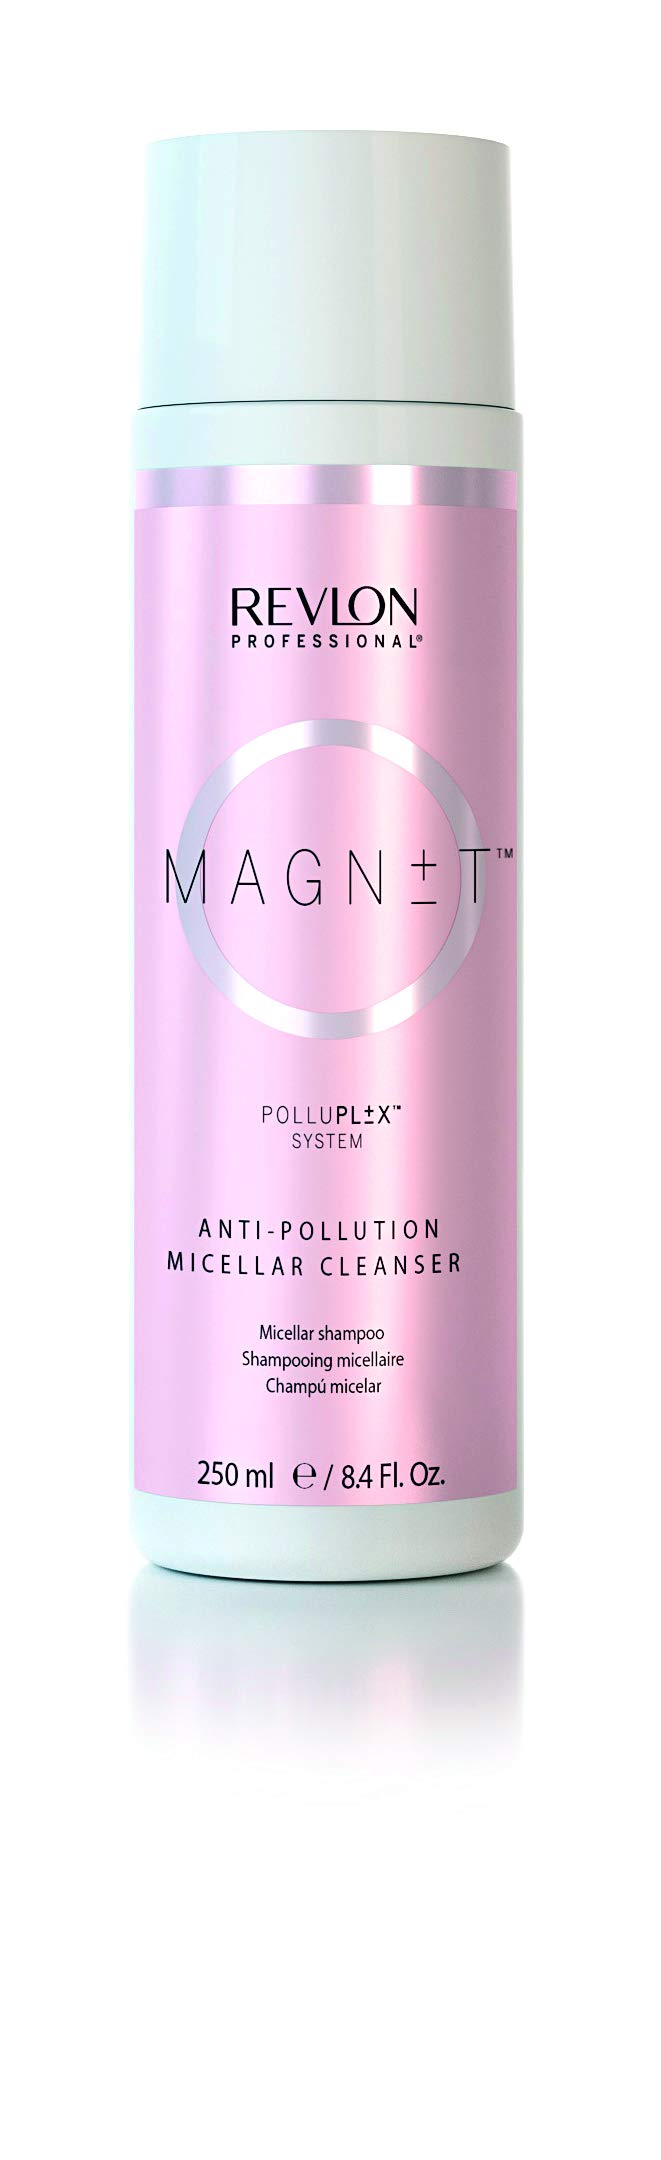 Revlon - Magnet - Anti-Pollution Micellar Cleanser- (250ml) - by Revlon |ProCare Outlet|